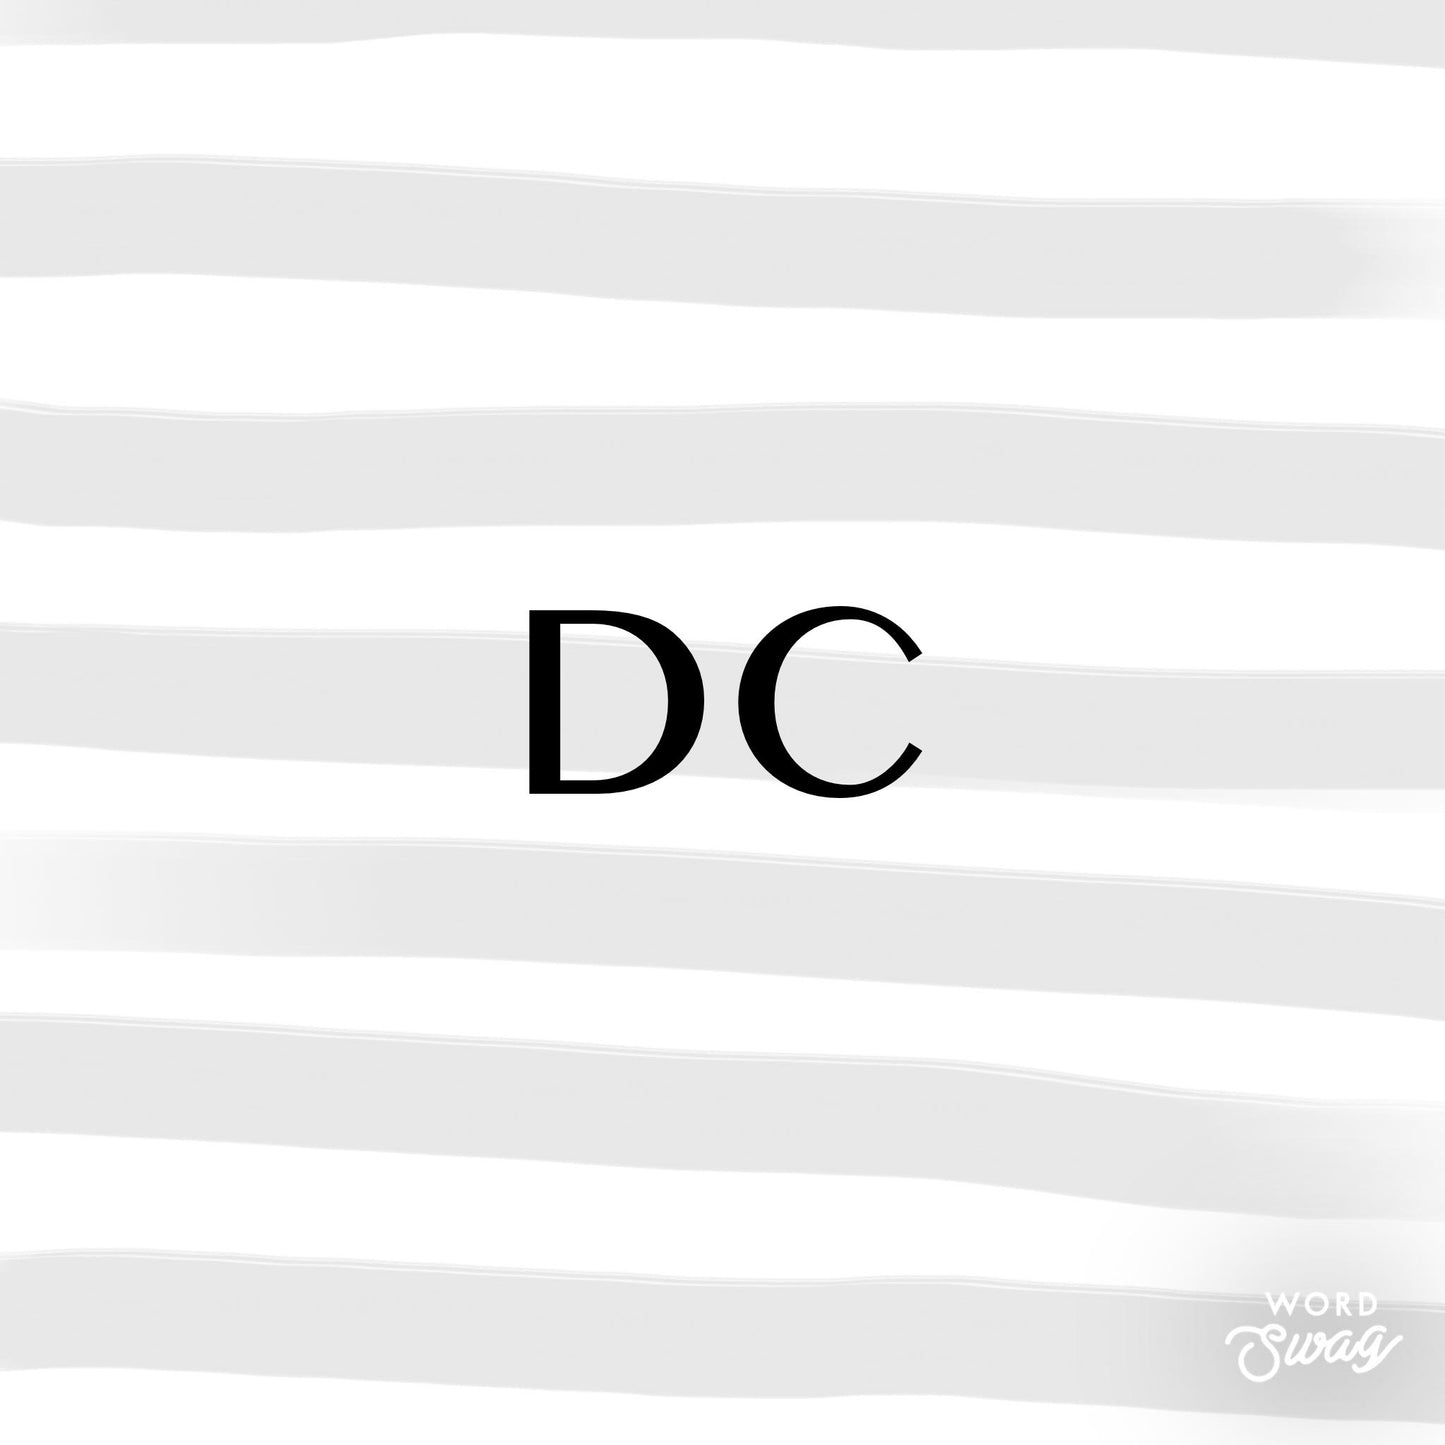 DC